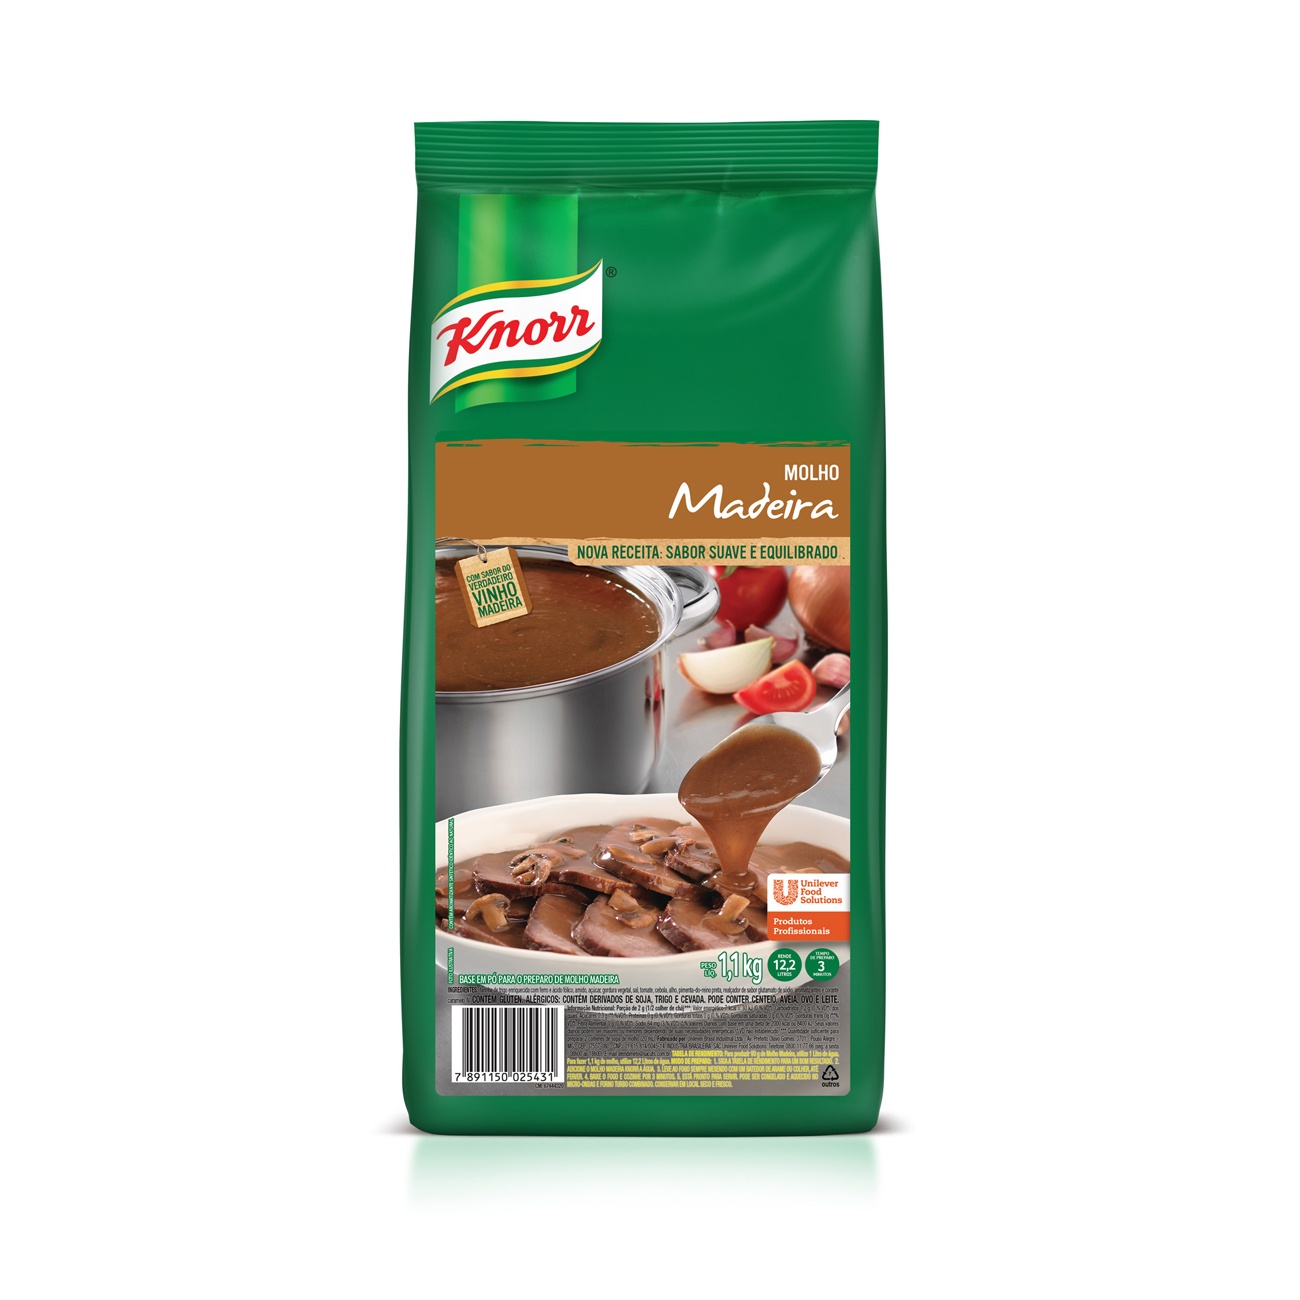 Molho Madeira Knorr Bag 1,1kg